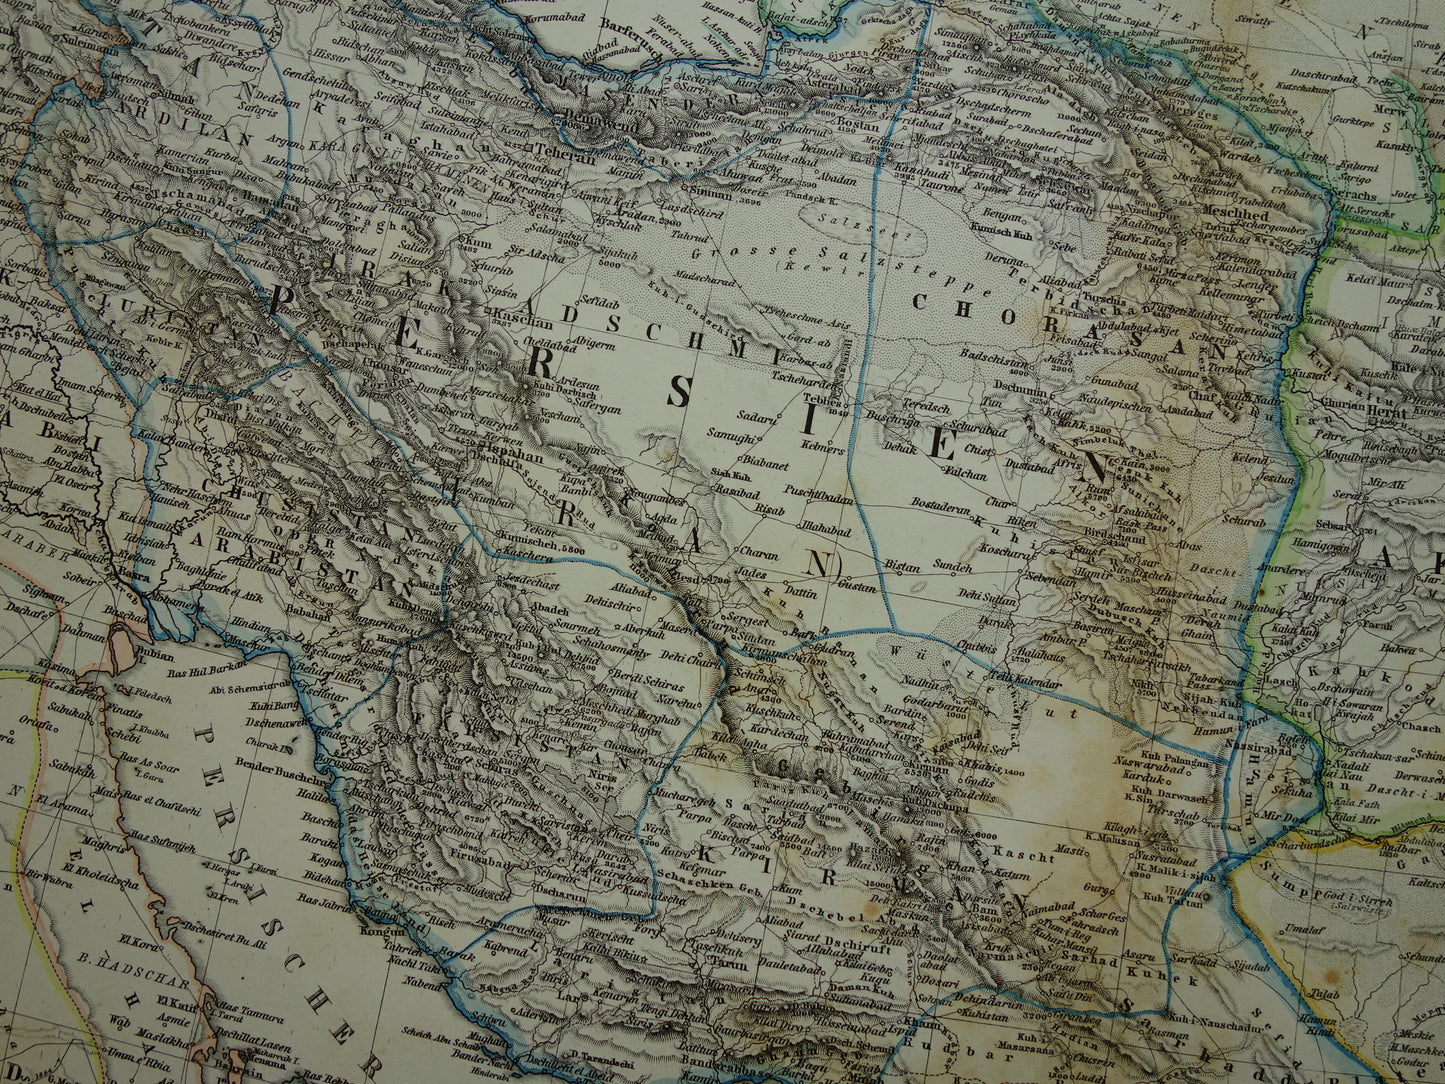 Oude kaart van IRAN uit 1884 Antieke handgekleurde landkaart Perzië Turkmenistan Kaukasus